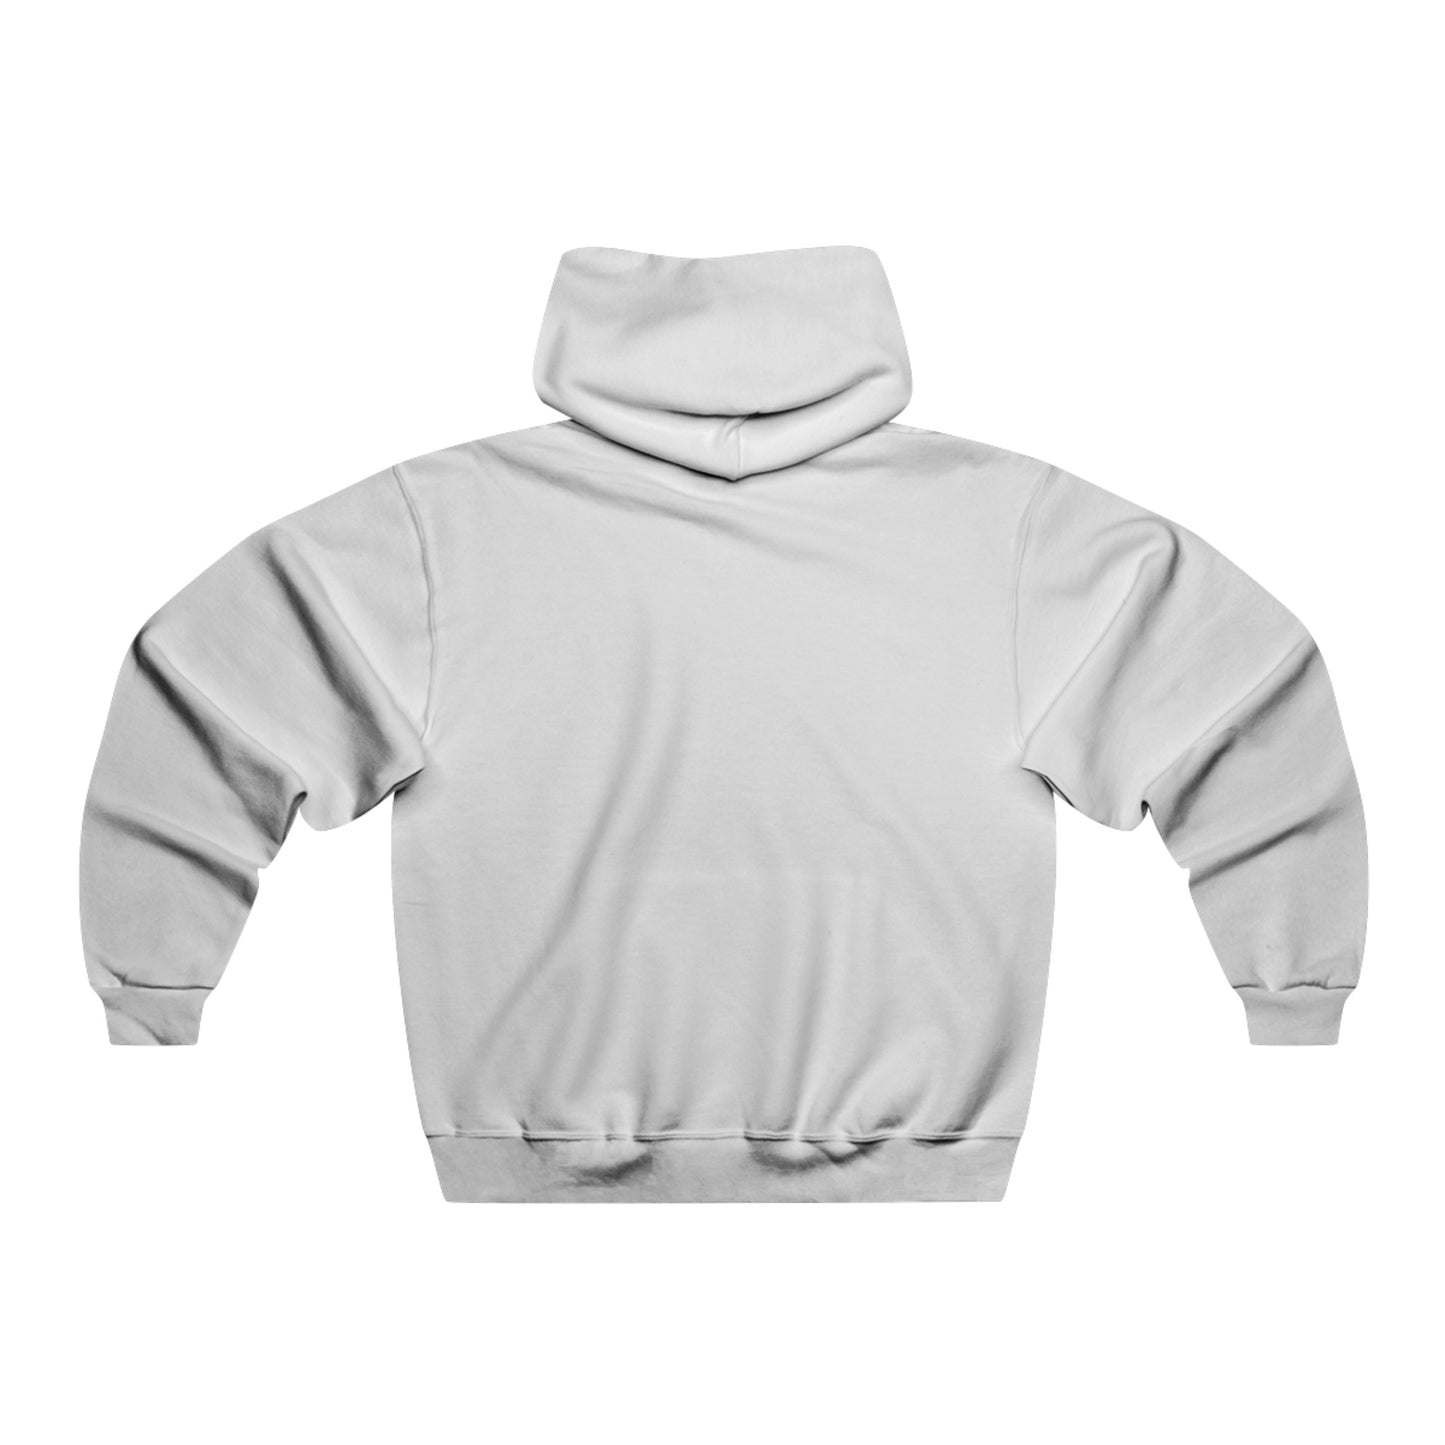 RUDINALZ Fan Art Hooded Sweatshirt by Stephanie Smith